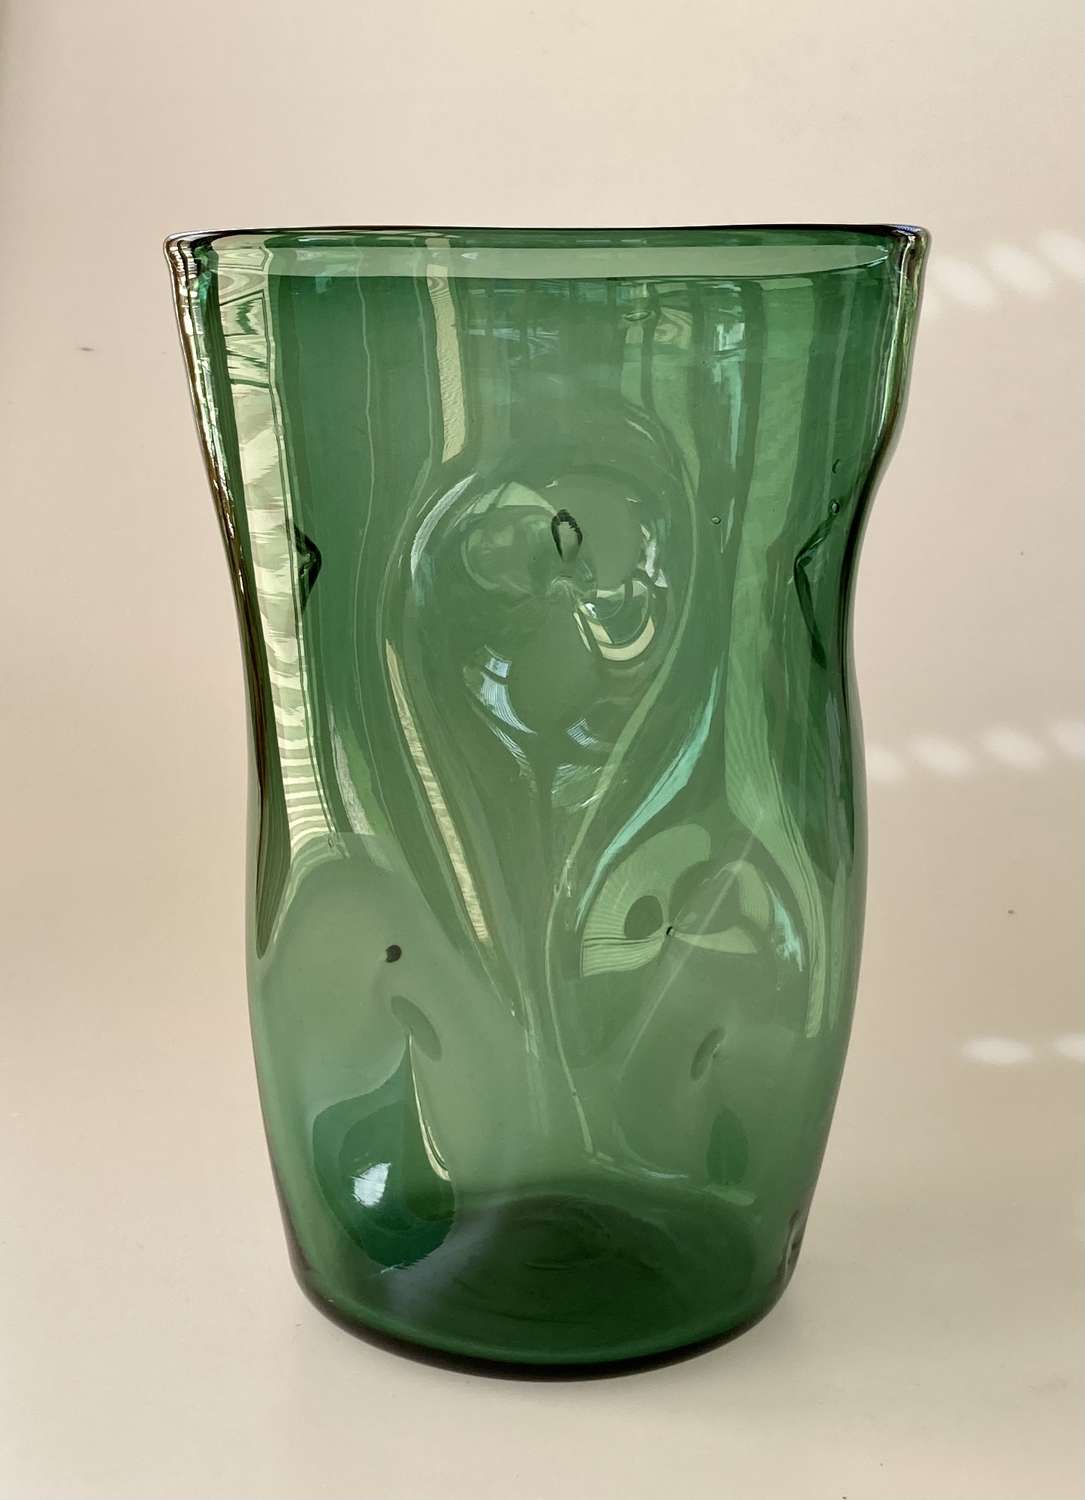 Green “dimple” vase